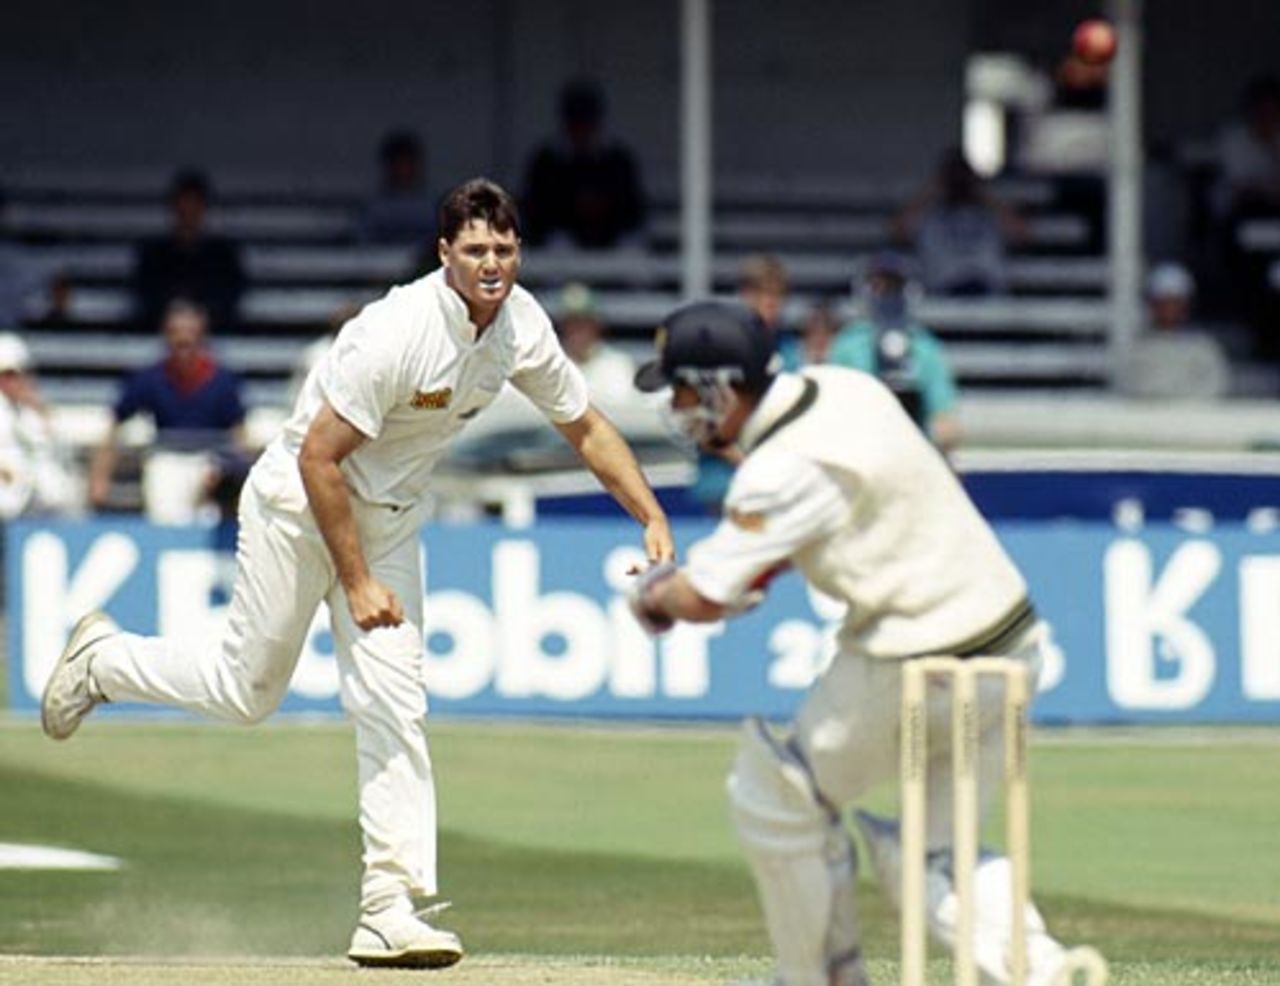 Martin McCague bowls a bouncer, England v Australia, 3rd Test, Trent Bridge, 2nd day, July 2, 1993